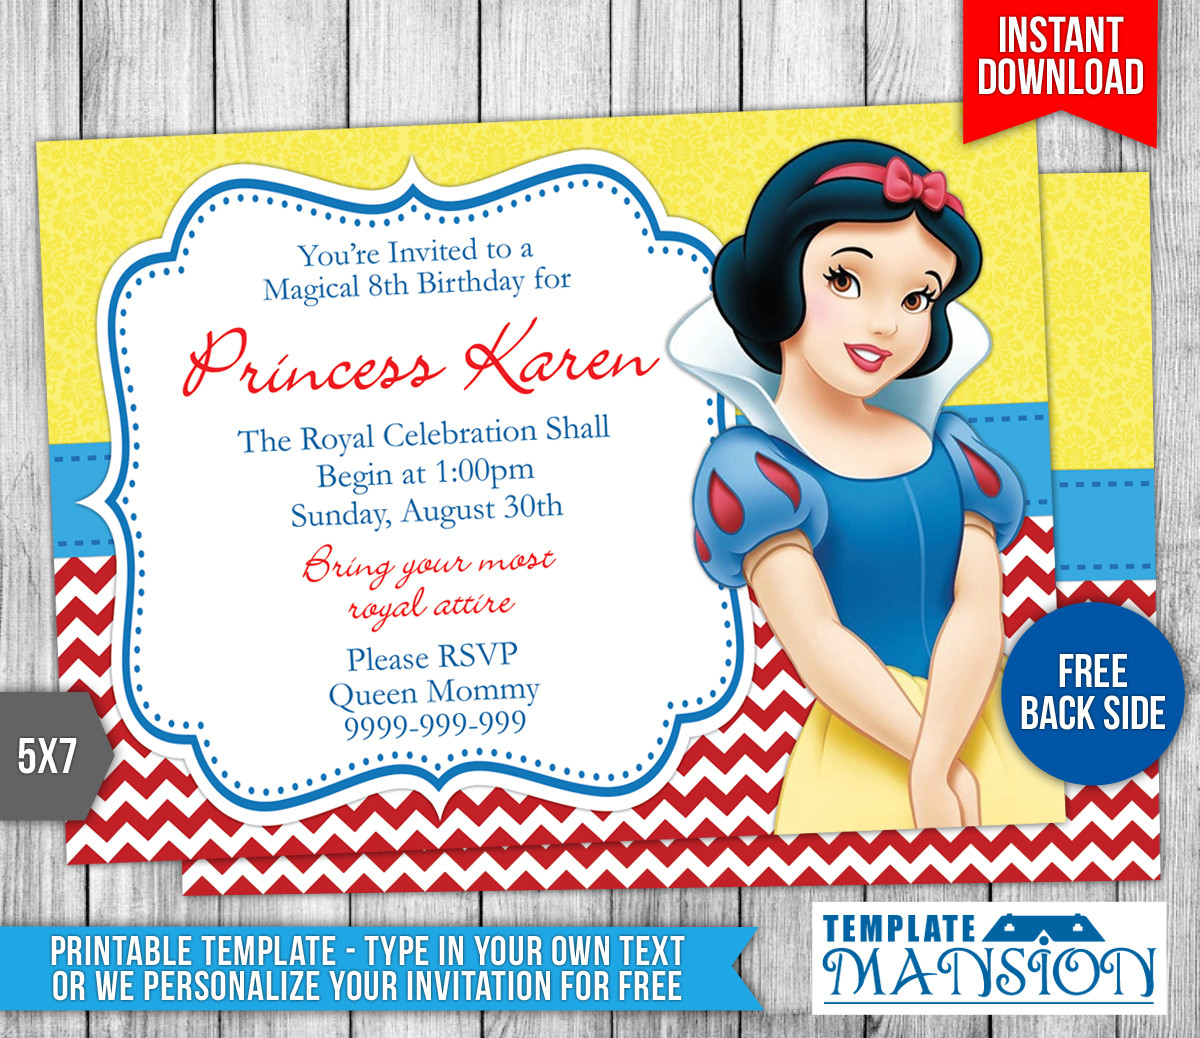 Snow White Birthday Invitations
 Snow White Birthday Invitation 2 by templatemansion on